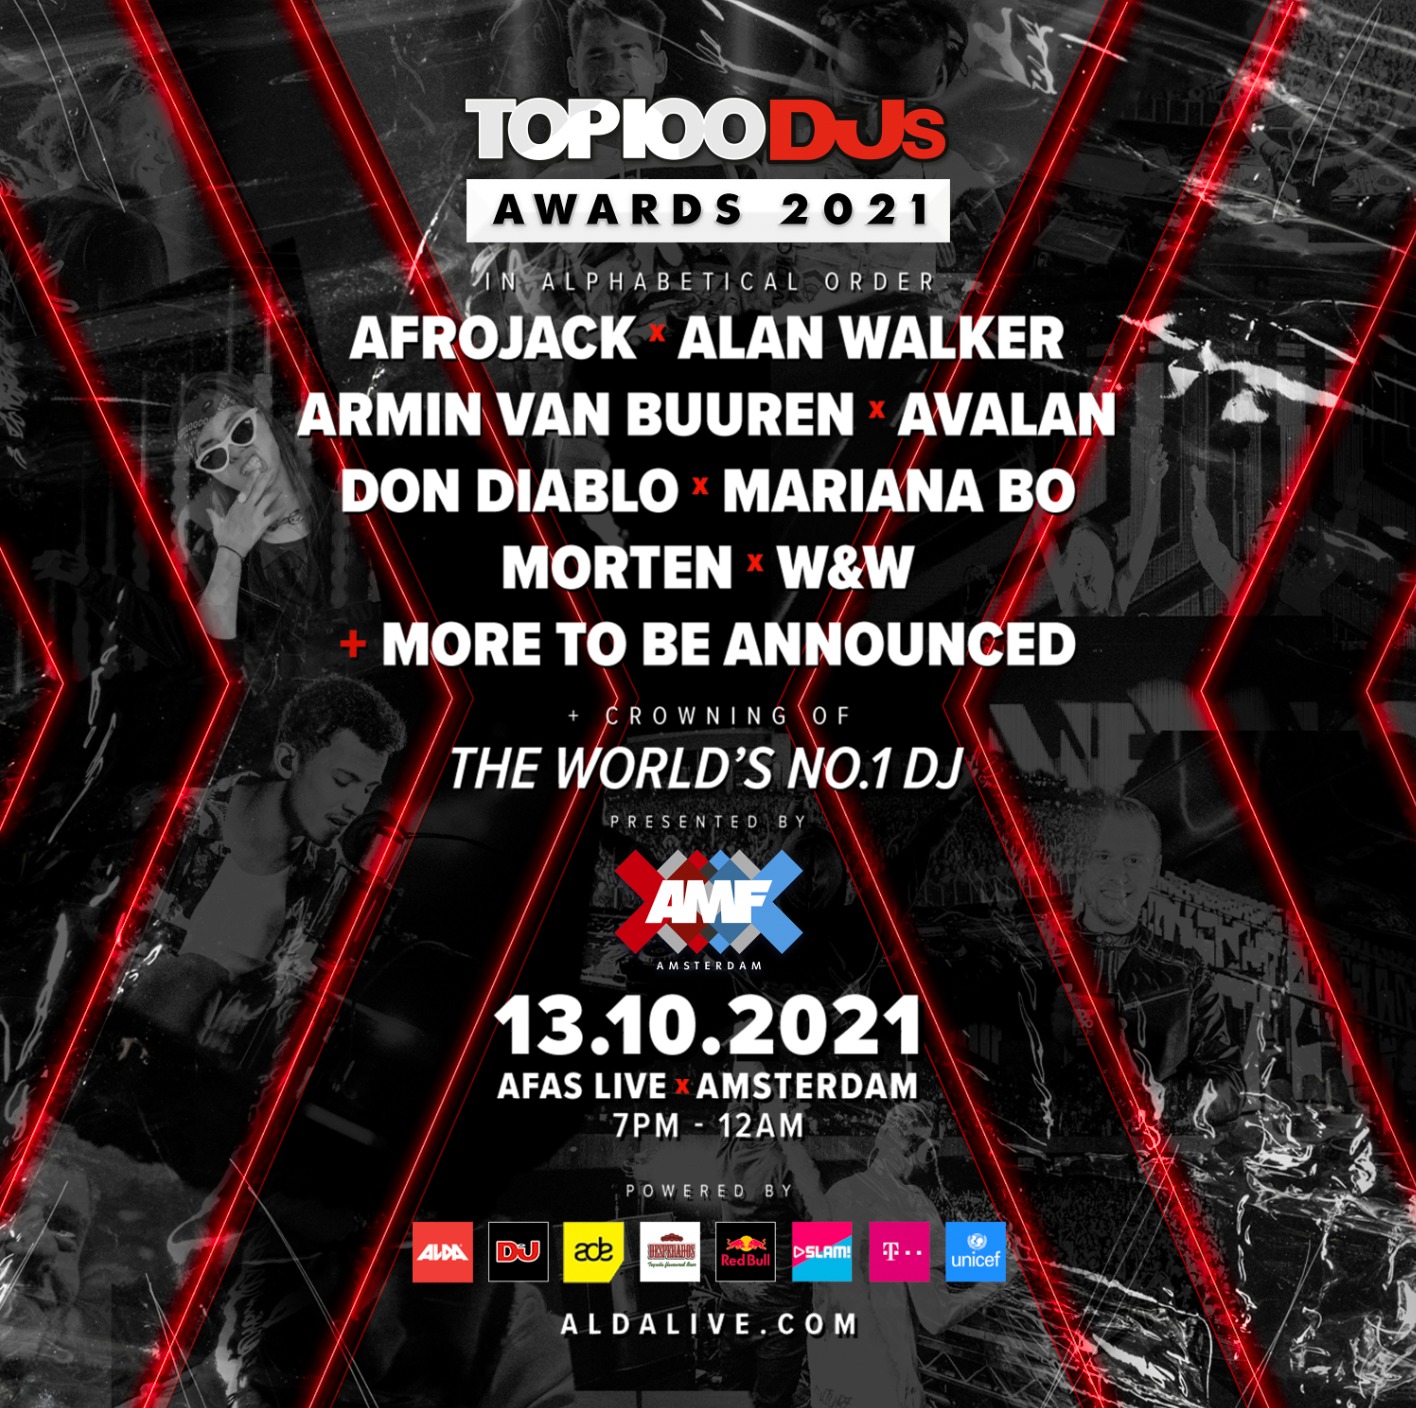 DJ MAG TOP 100 DJS 2021 WINNER ANNOUNCED NEXT WEEK Pitch The Tempo